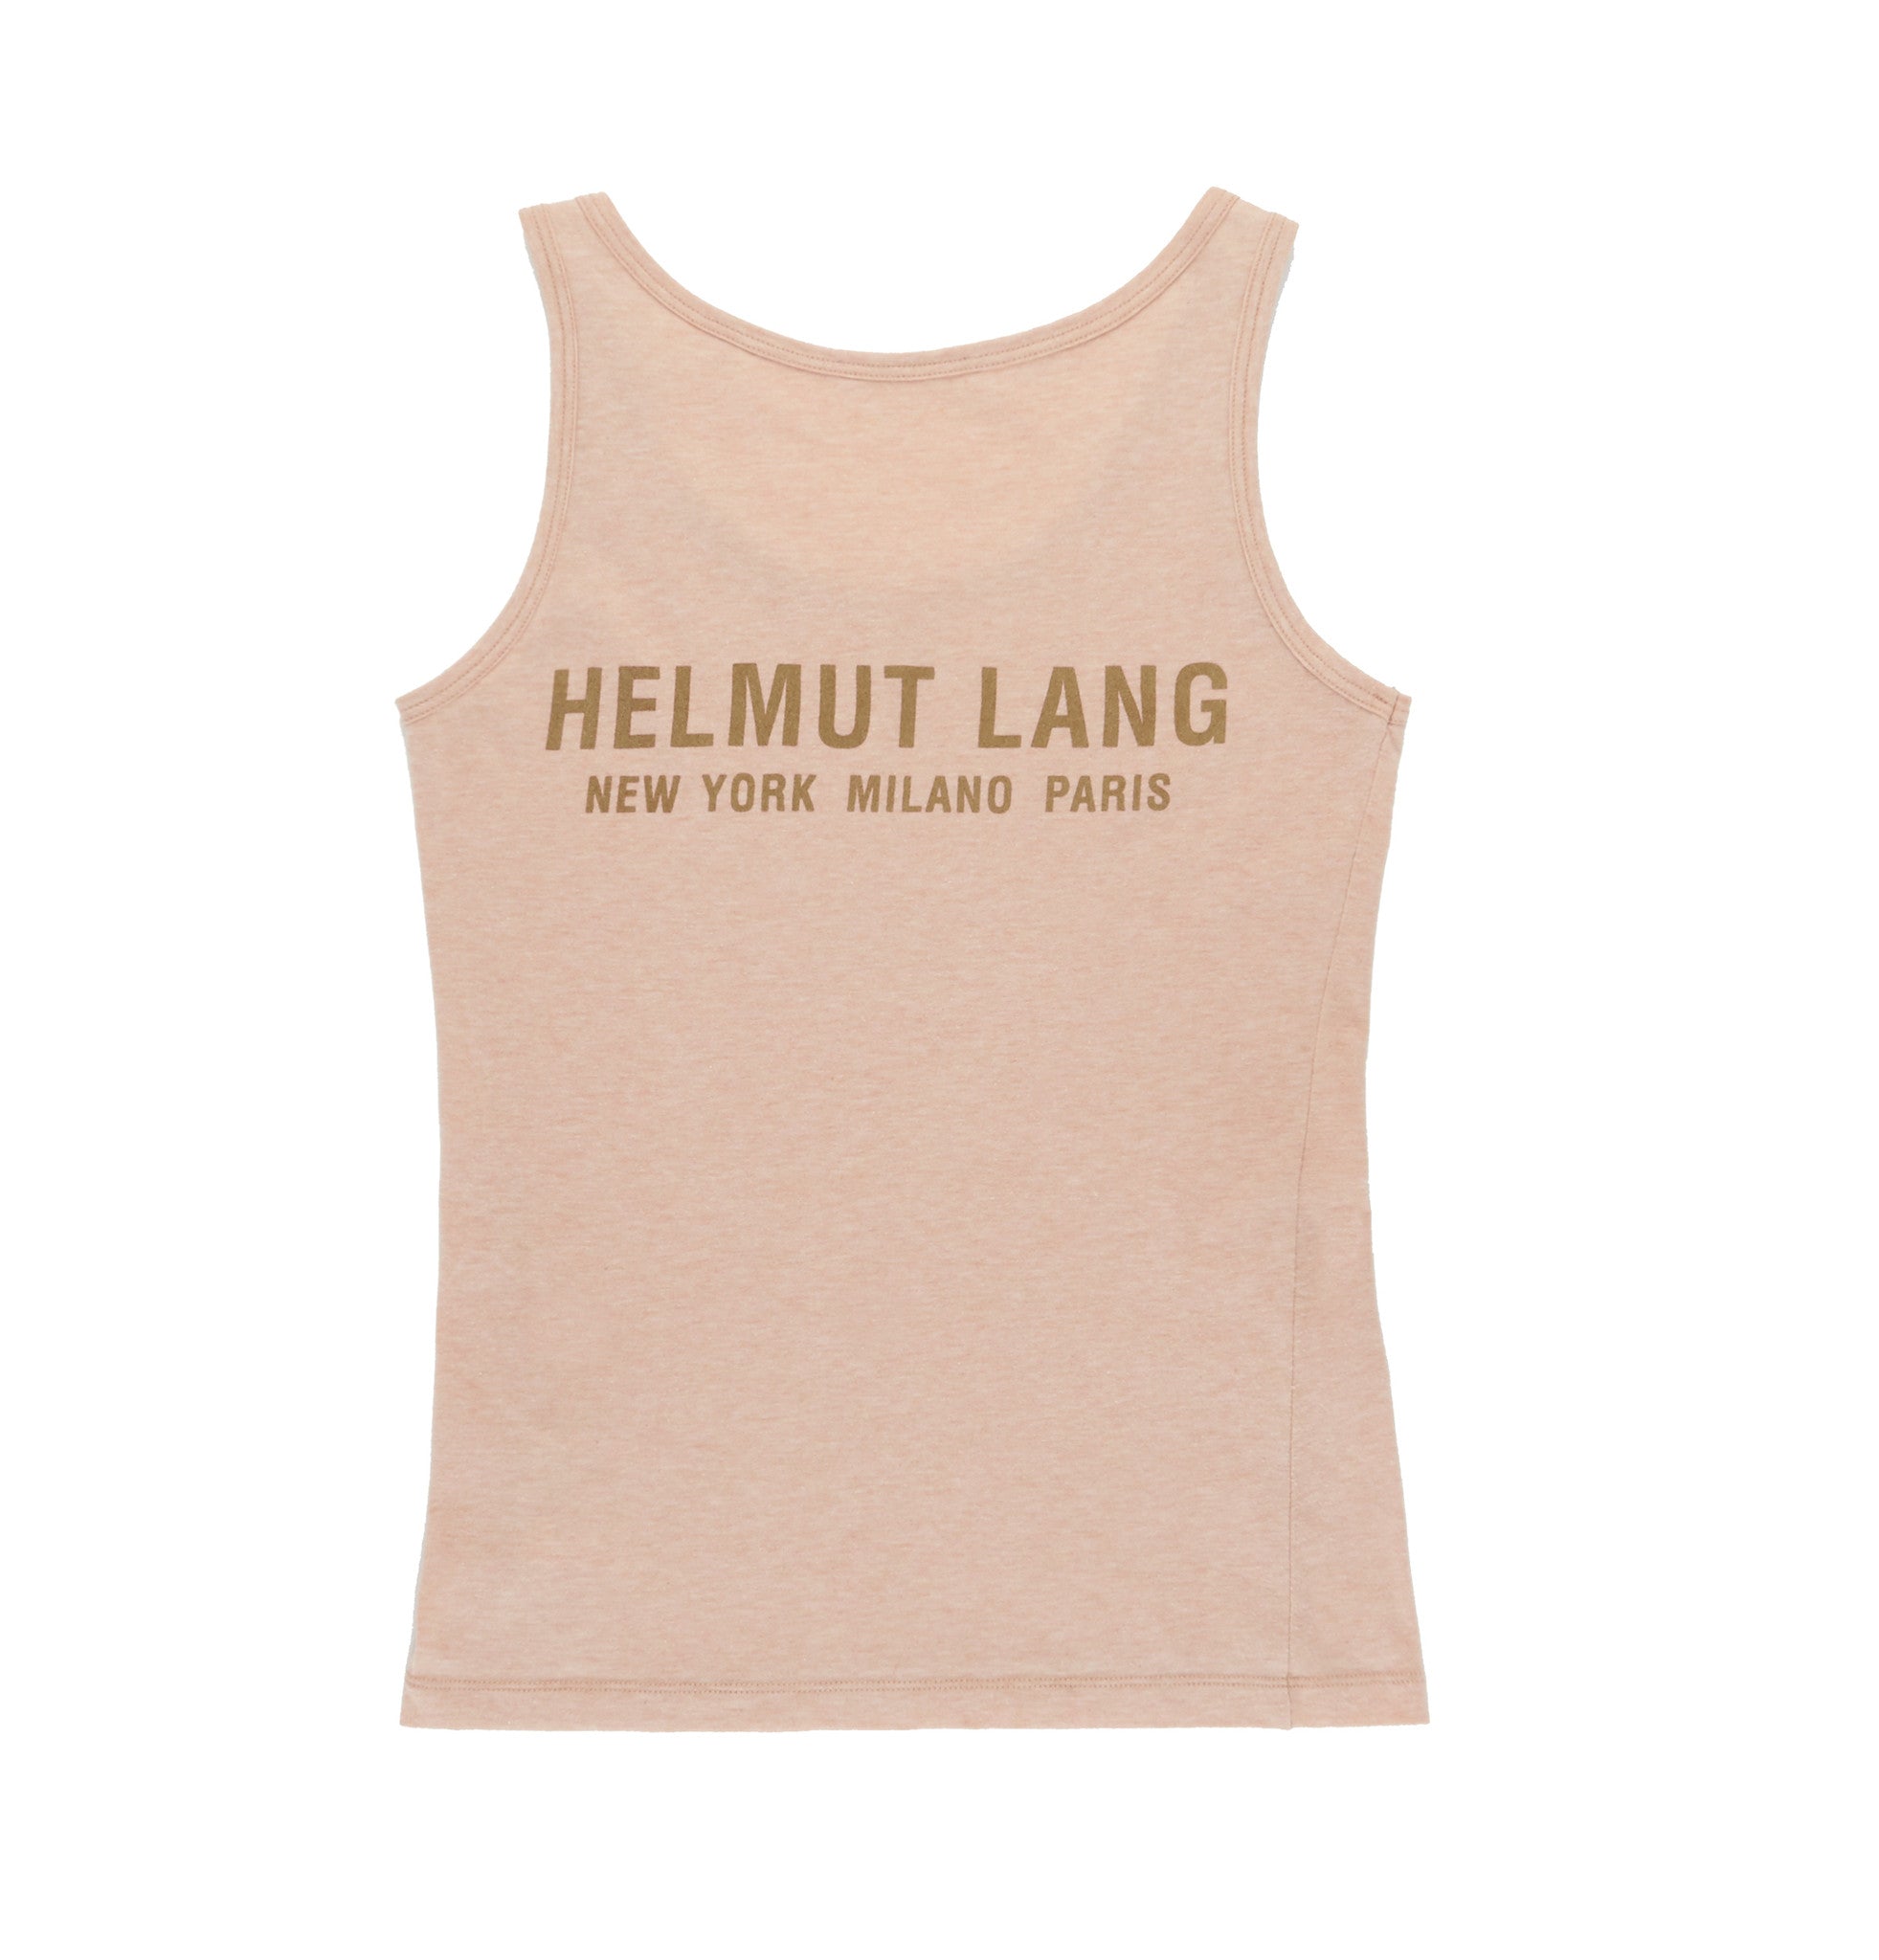 Helmut Lang Vintage Fashion Print Ad Advertisement: 2 Girls In Dresses